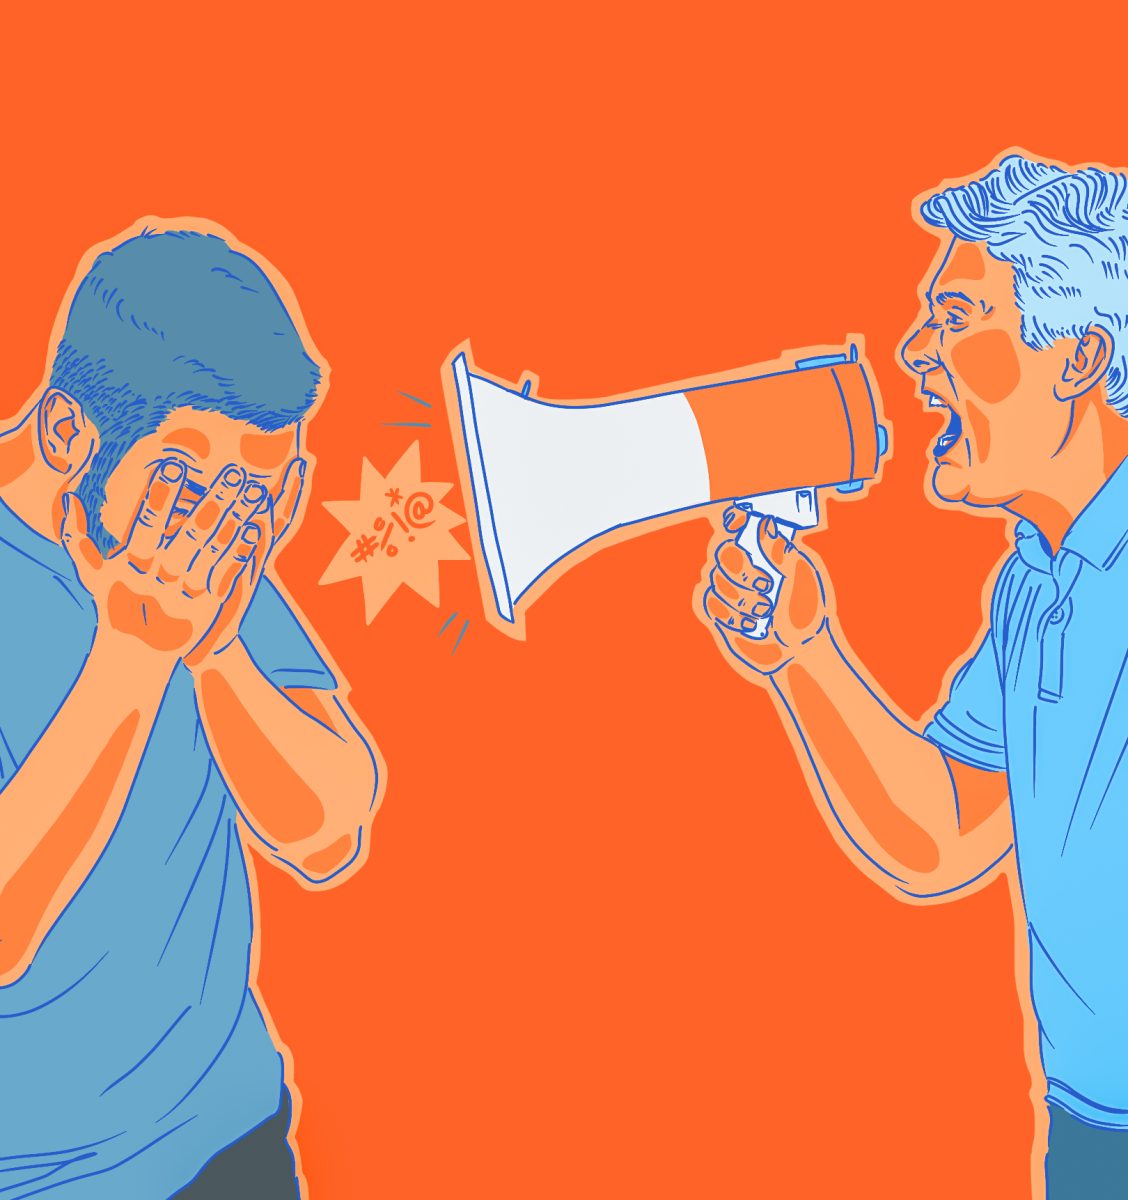 A man yells at someone through a megaphone. Illustration by Bianca Oppedisano / Mass Media Staff